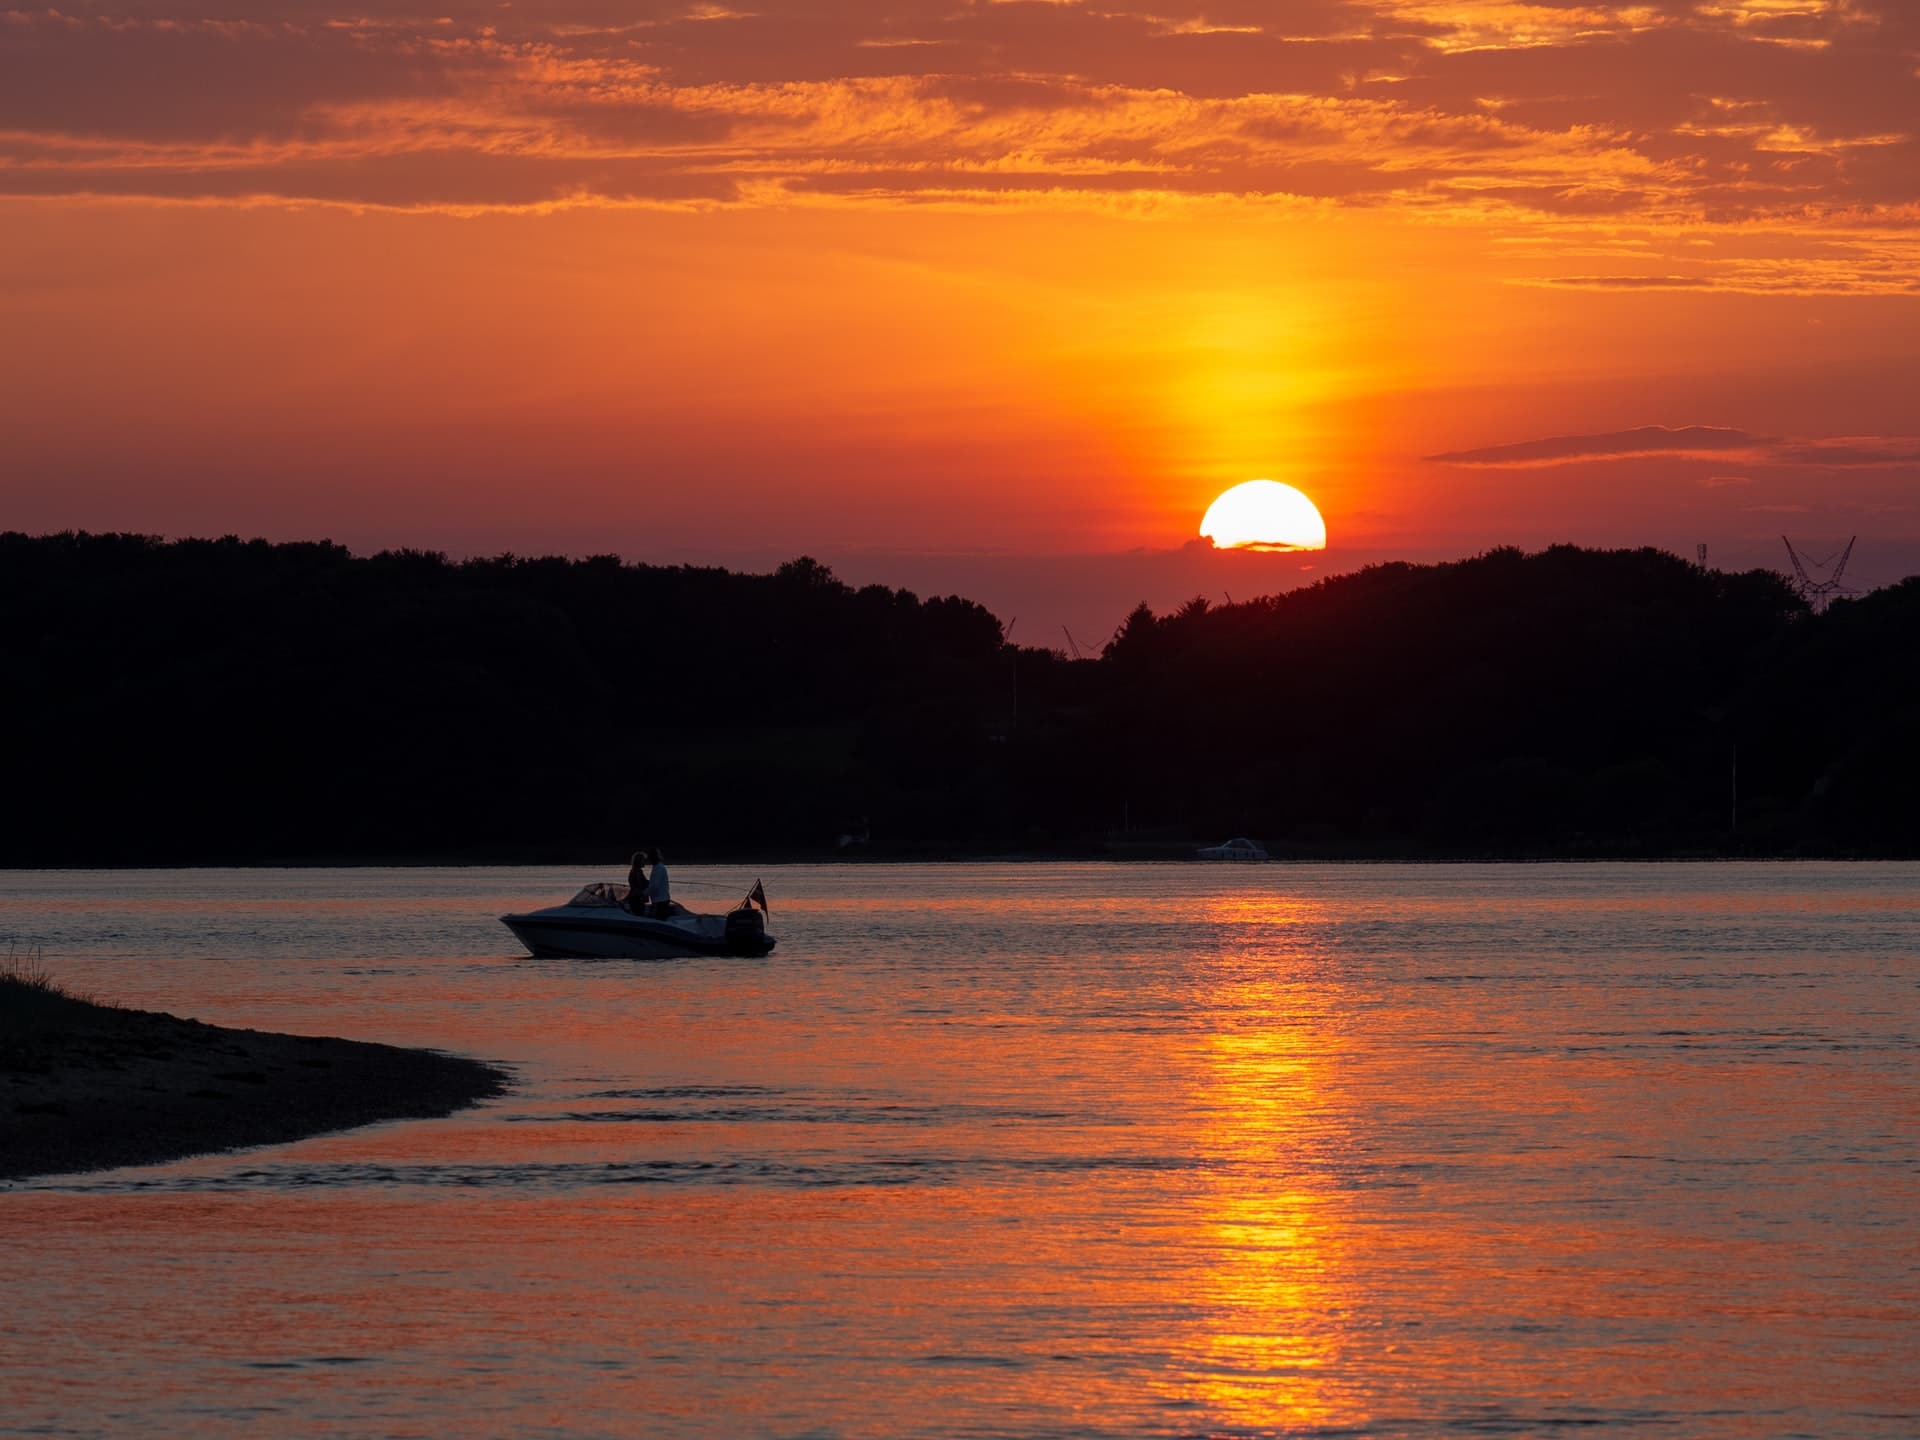 Boat in sunset. 